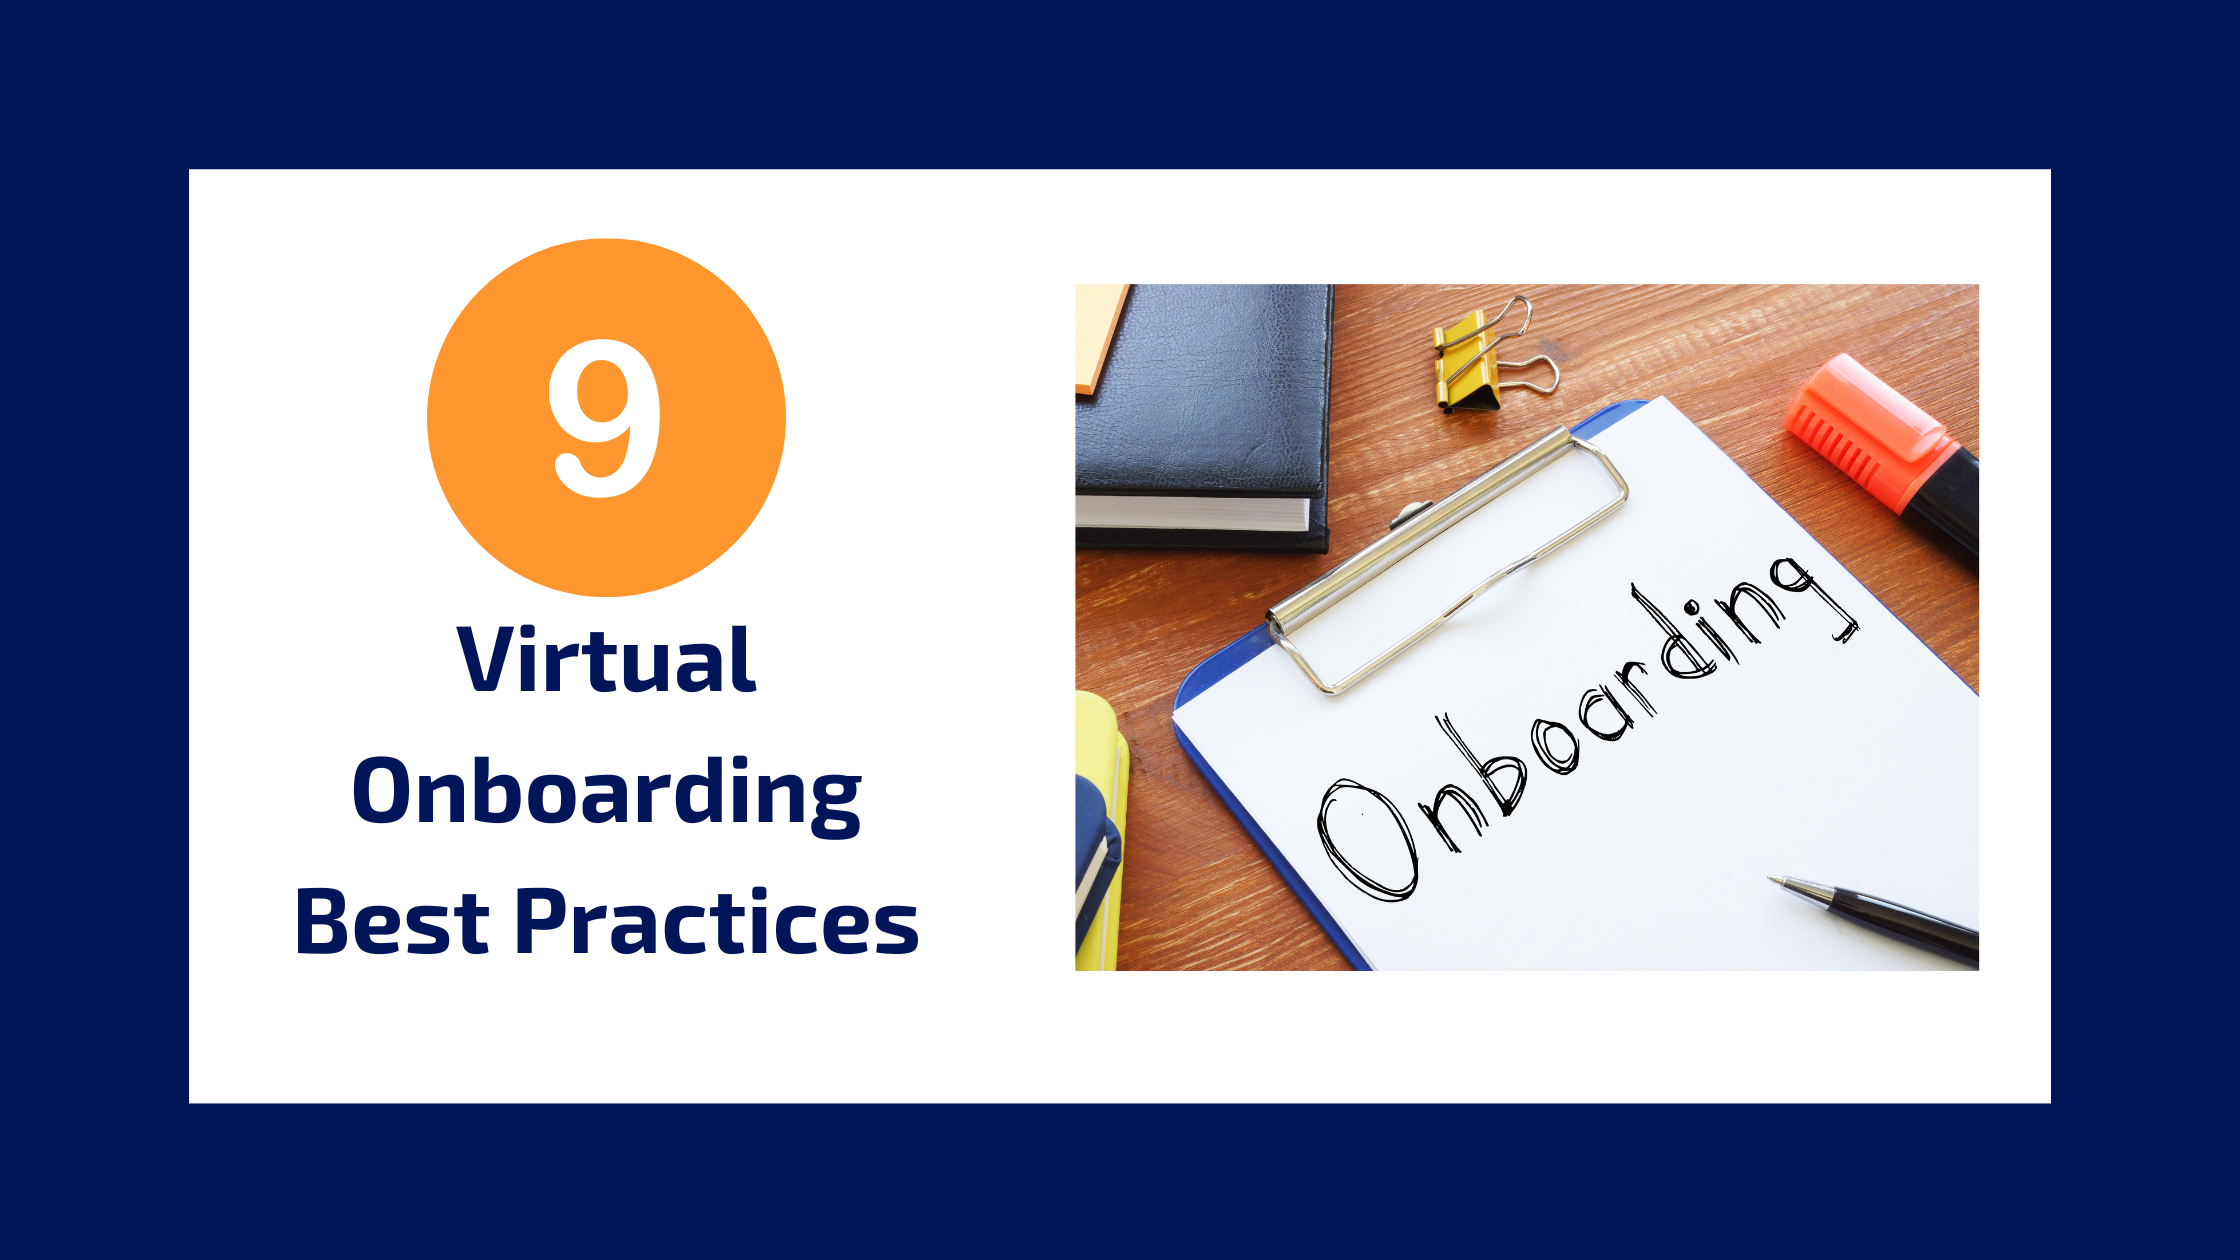 Virtual onboarding best practices